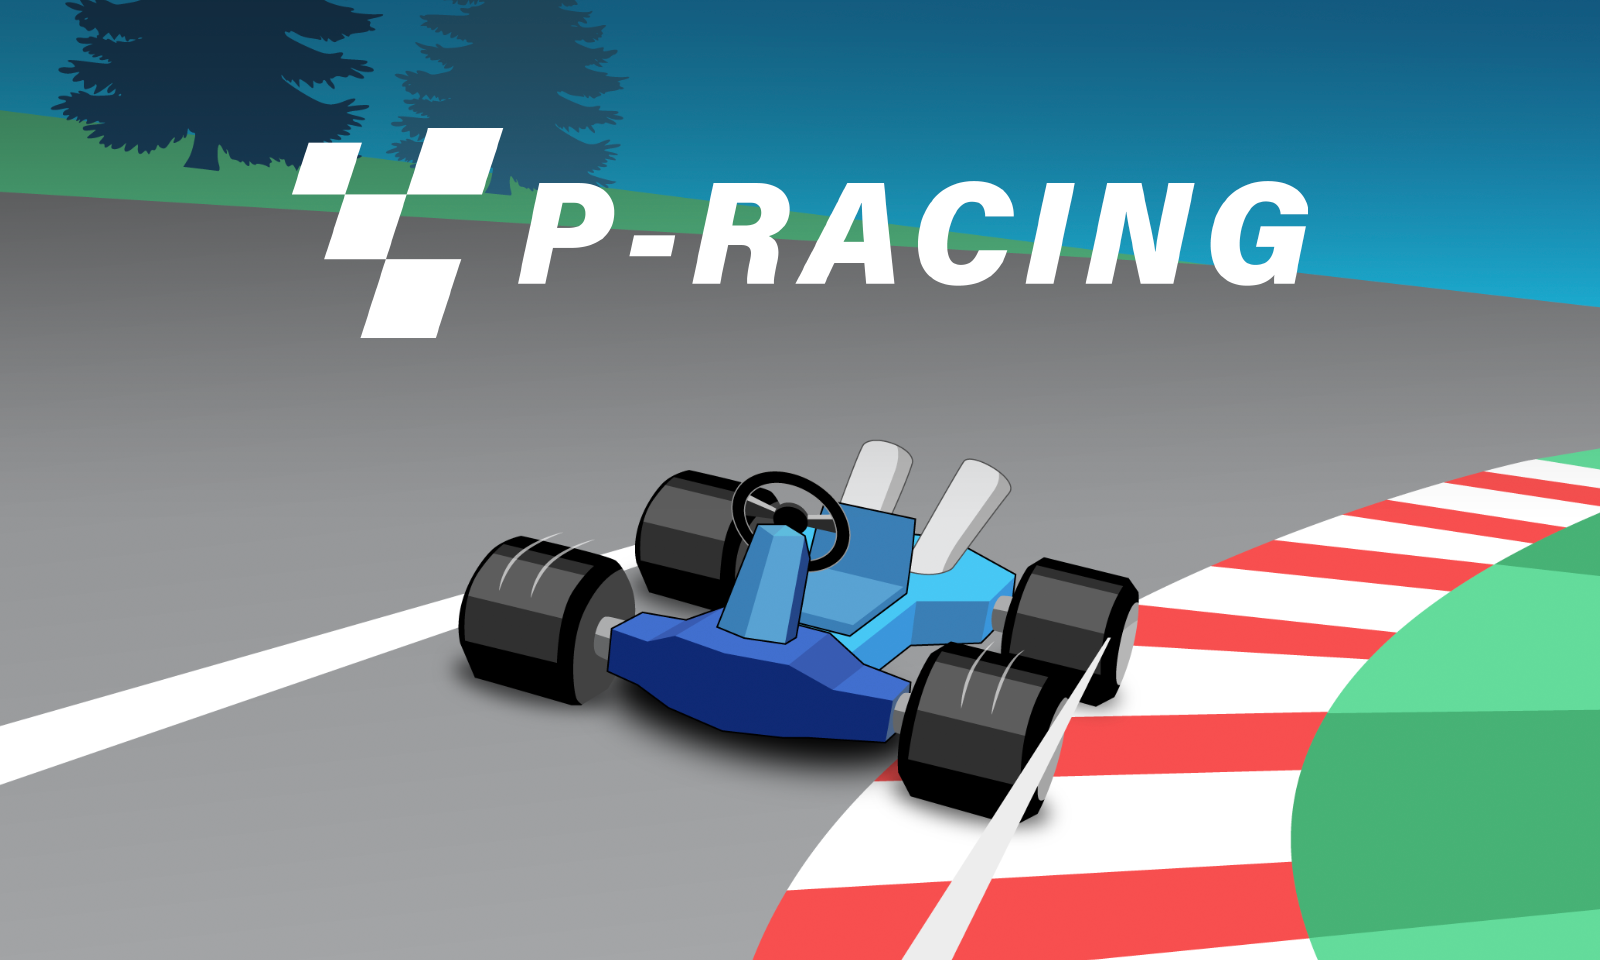 P-Racing